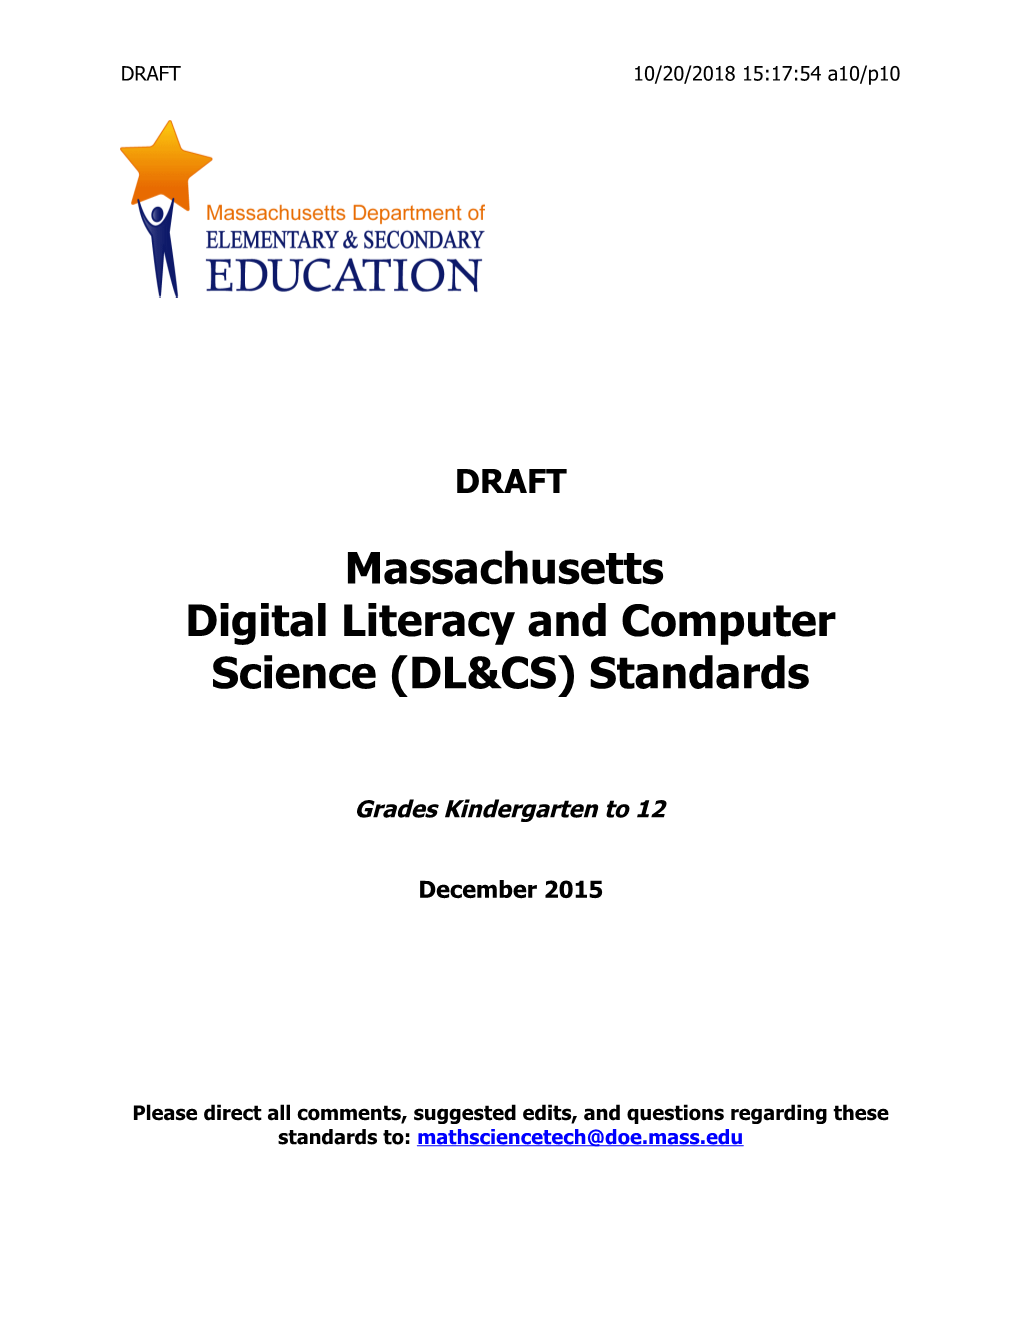 Massachusetts Digital Literacy and Computer Science Standards, Draft, December 2015